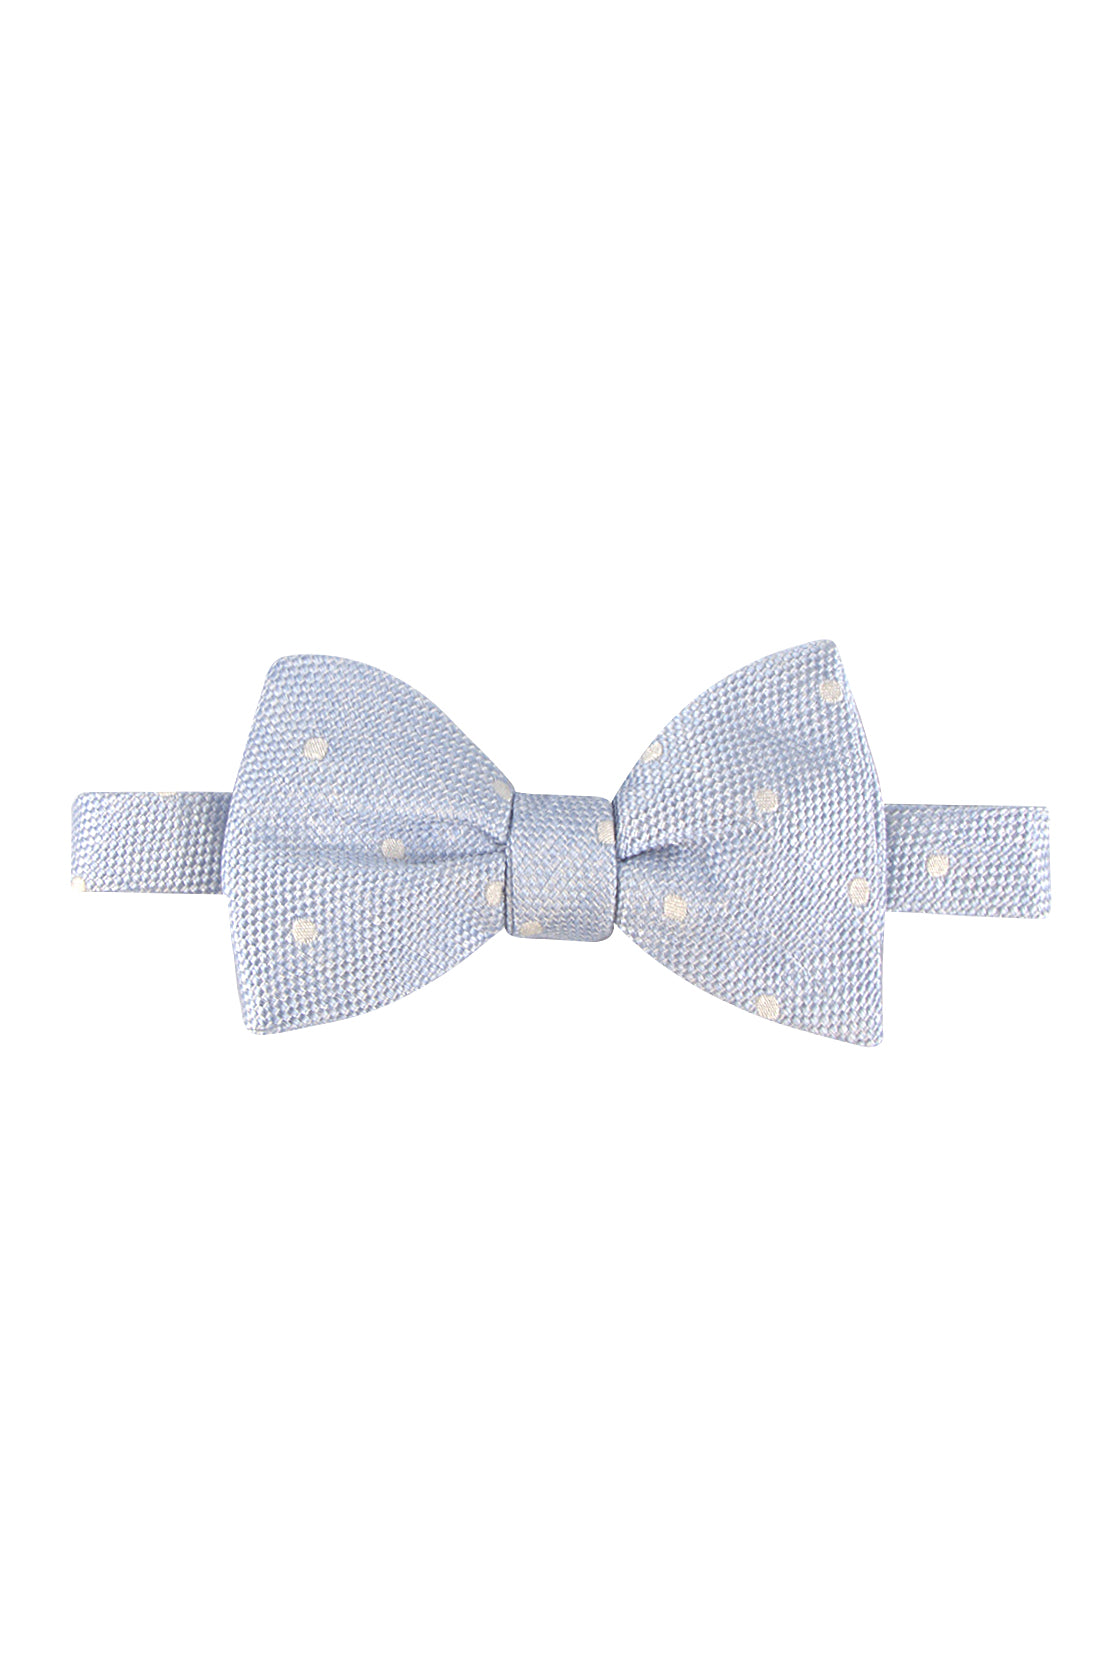 Hemley 6.5cm Silk/Cotton Dots Bow Tie 1230011-3/6